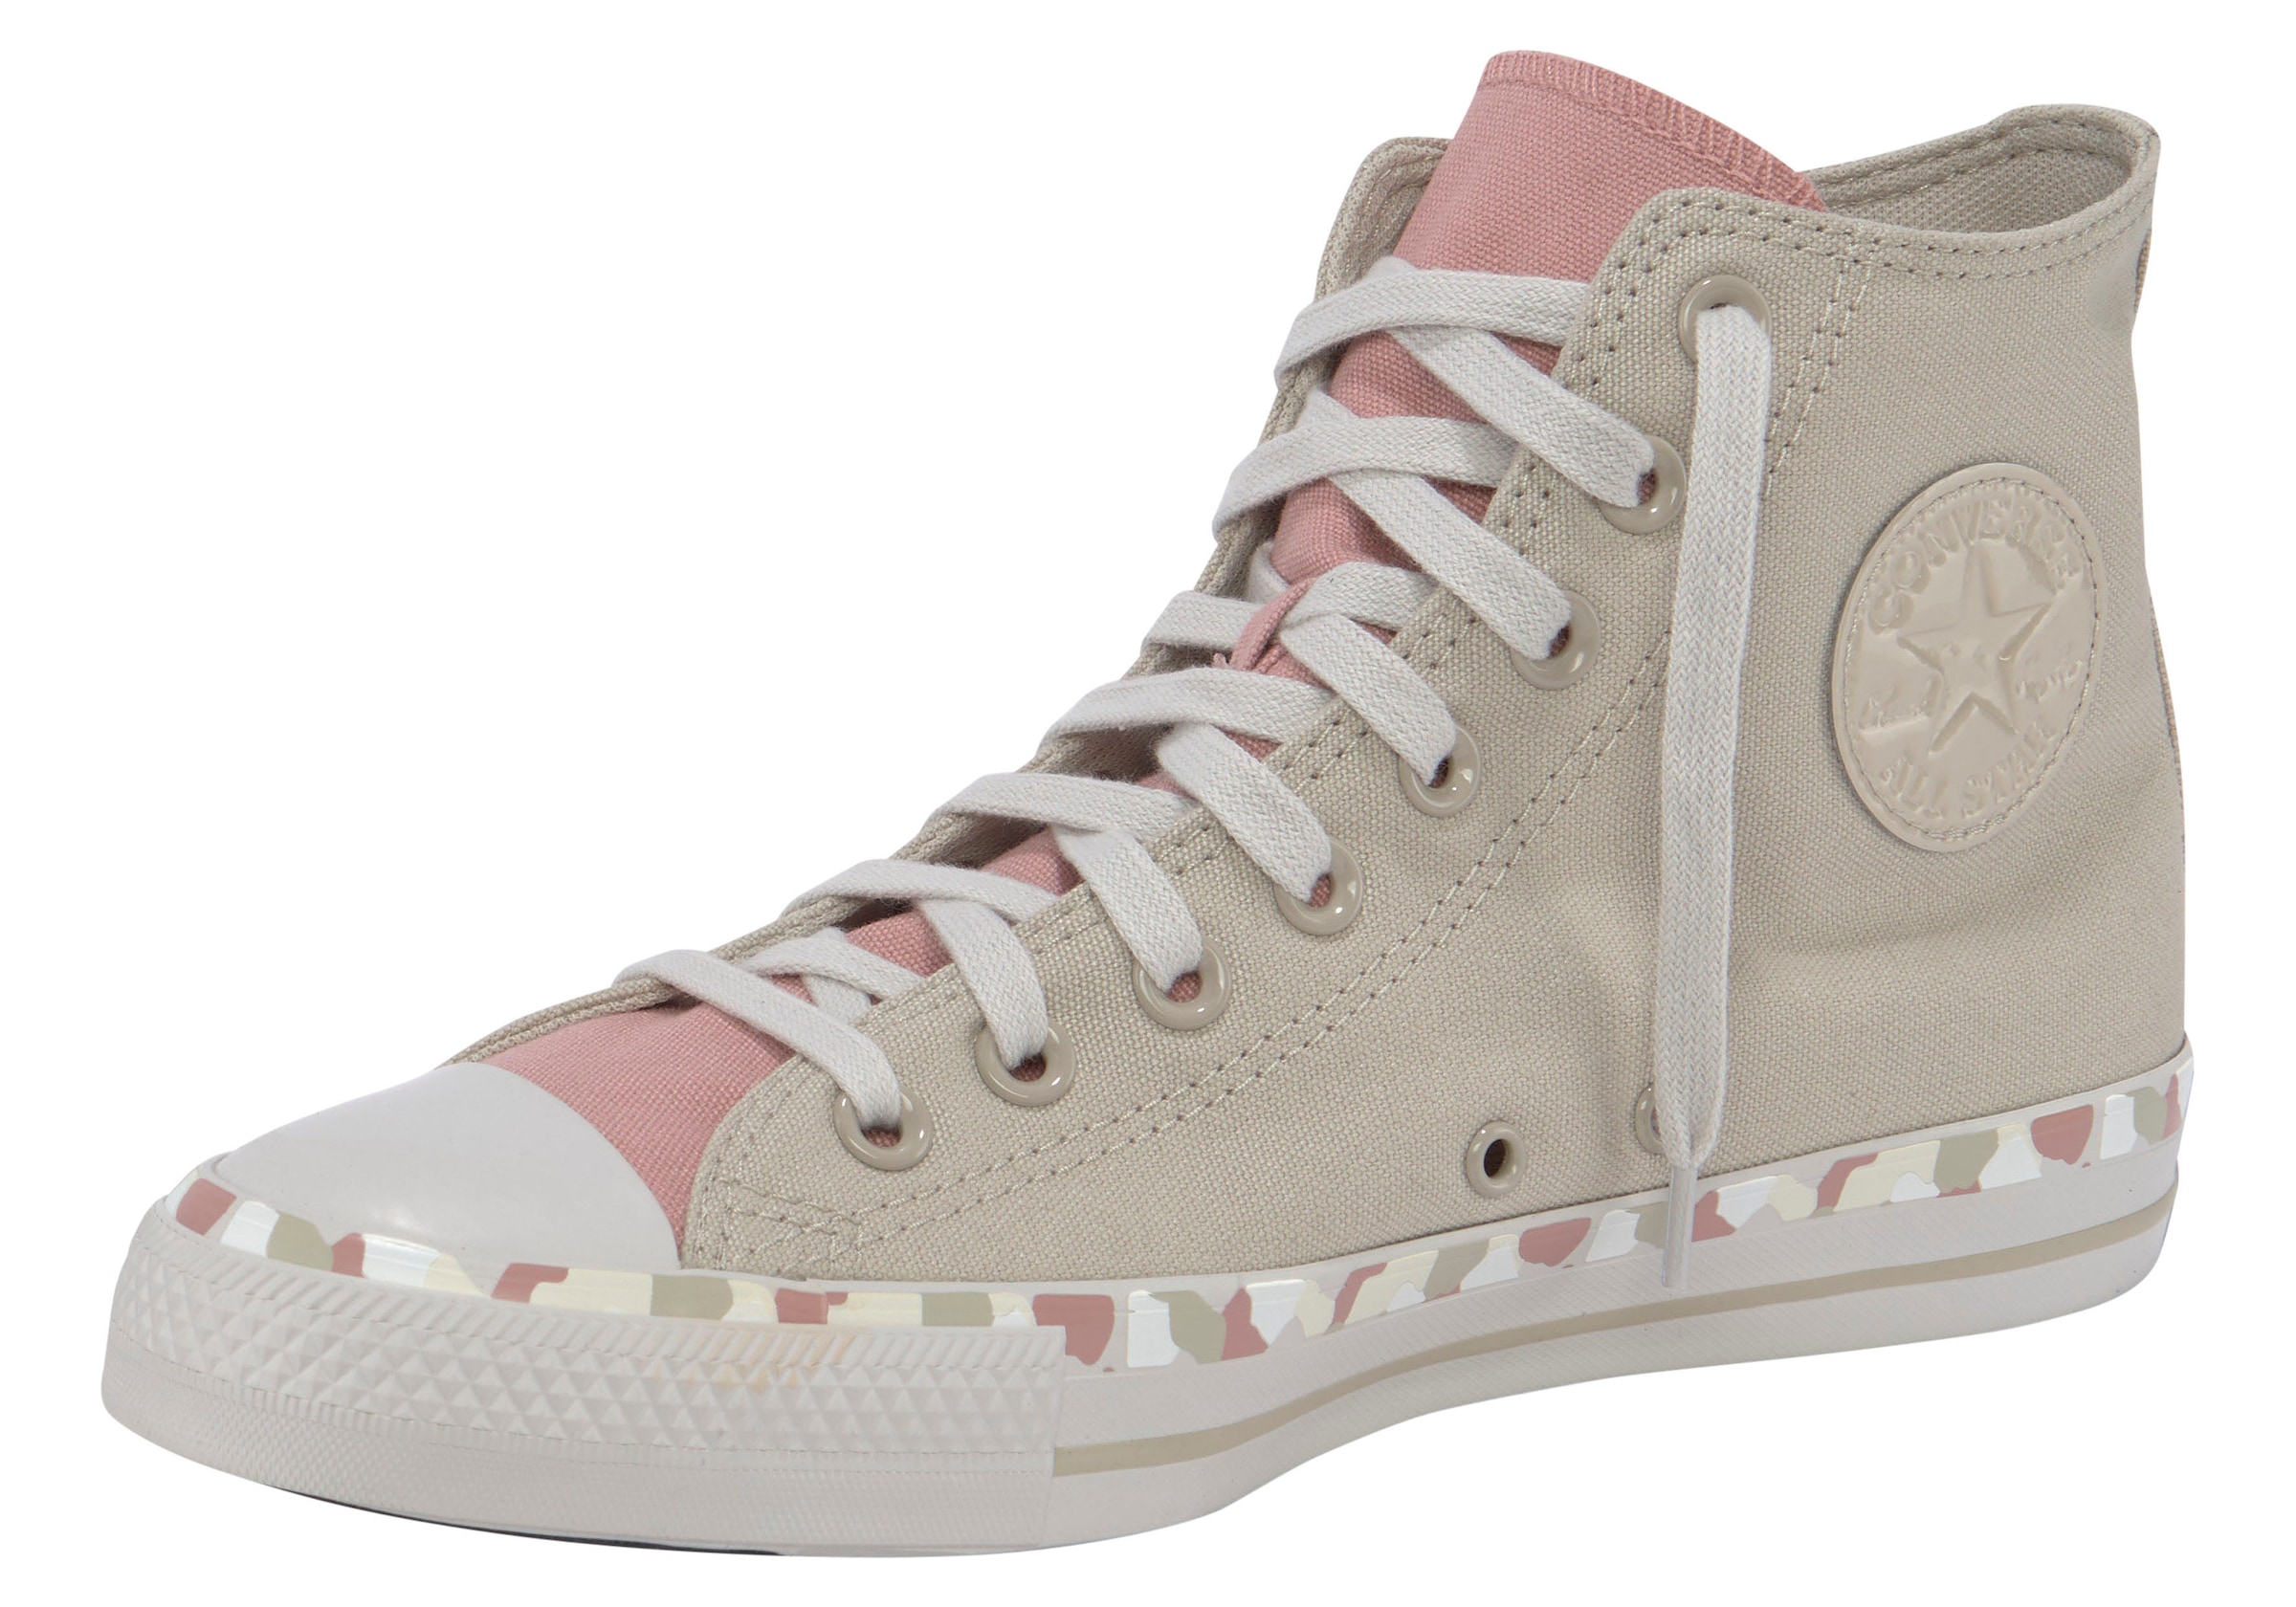 Sneaker Online Shop OTTO im bestellen »CHUCK MARBLED ALL HI« Converse STAR TAYLOR